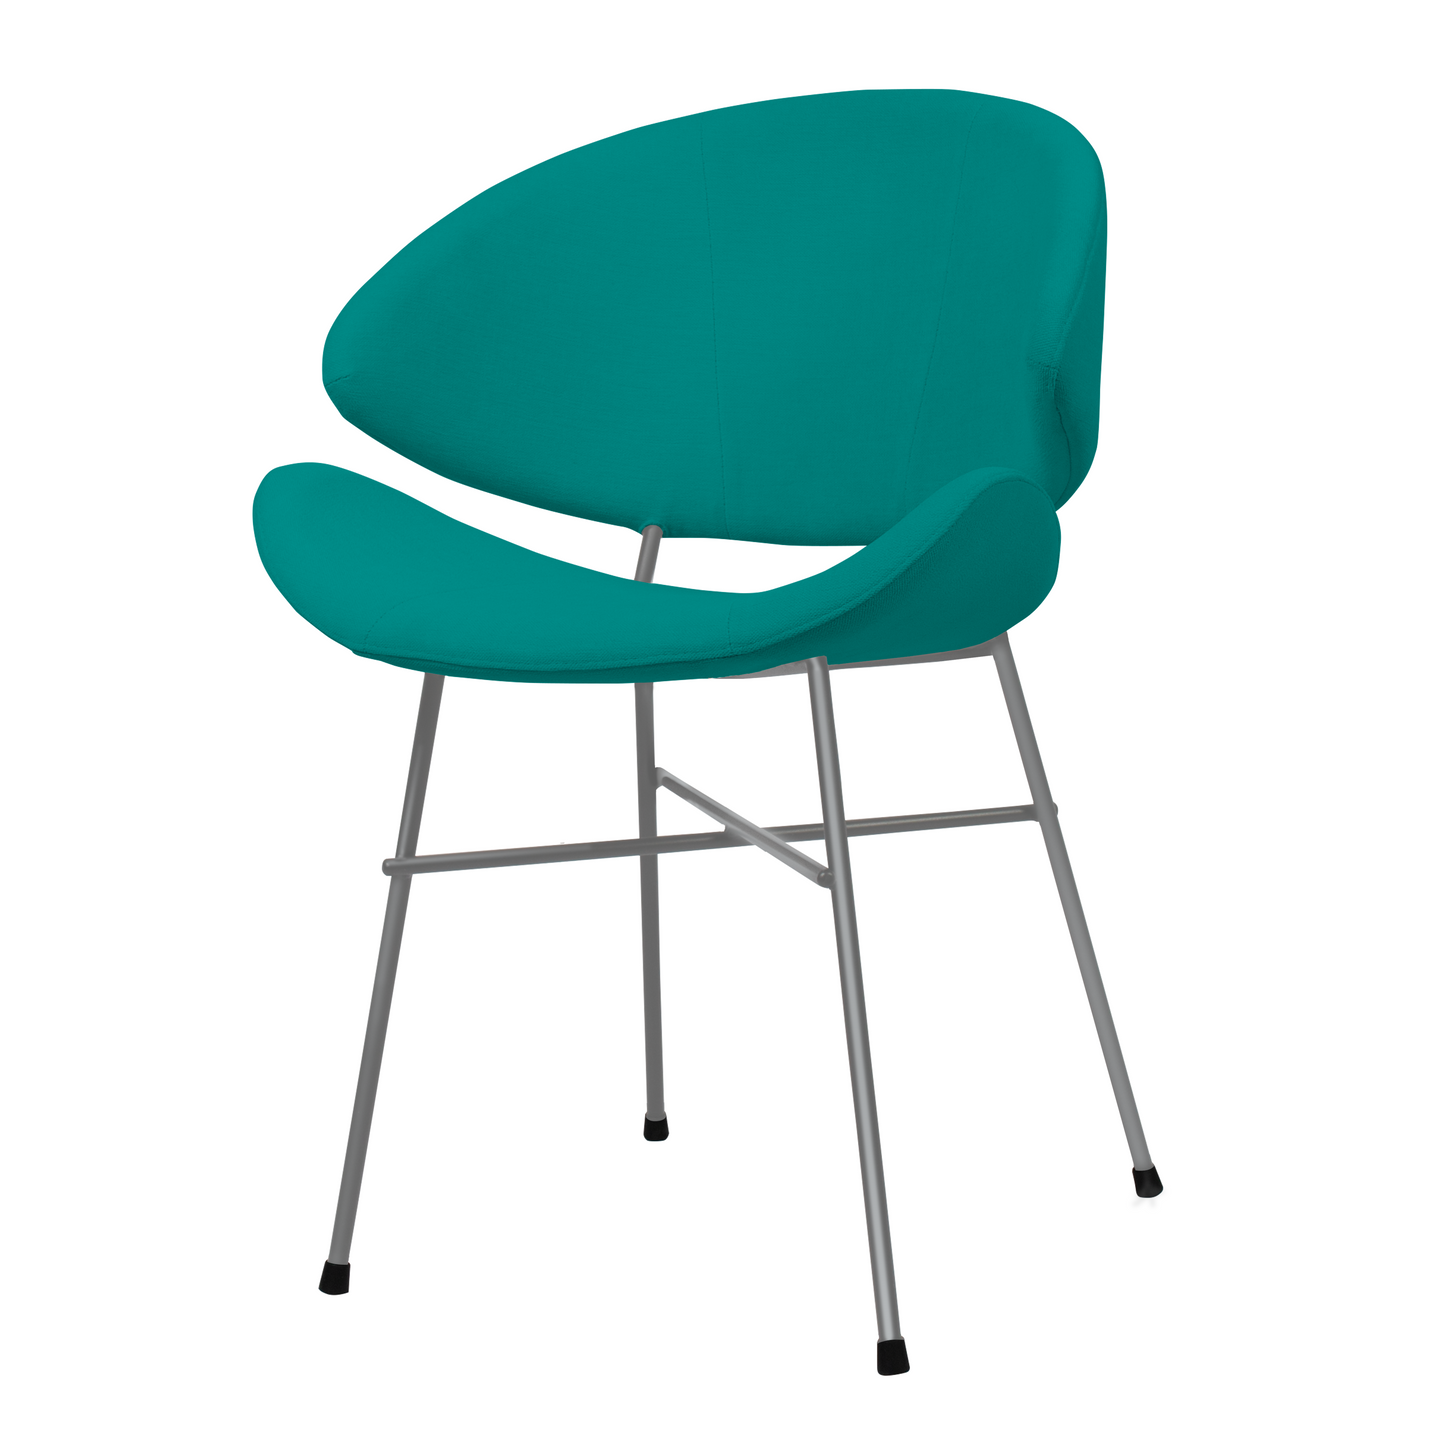 Chair Cheri Trend - Turquoise